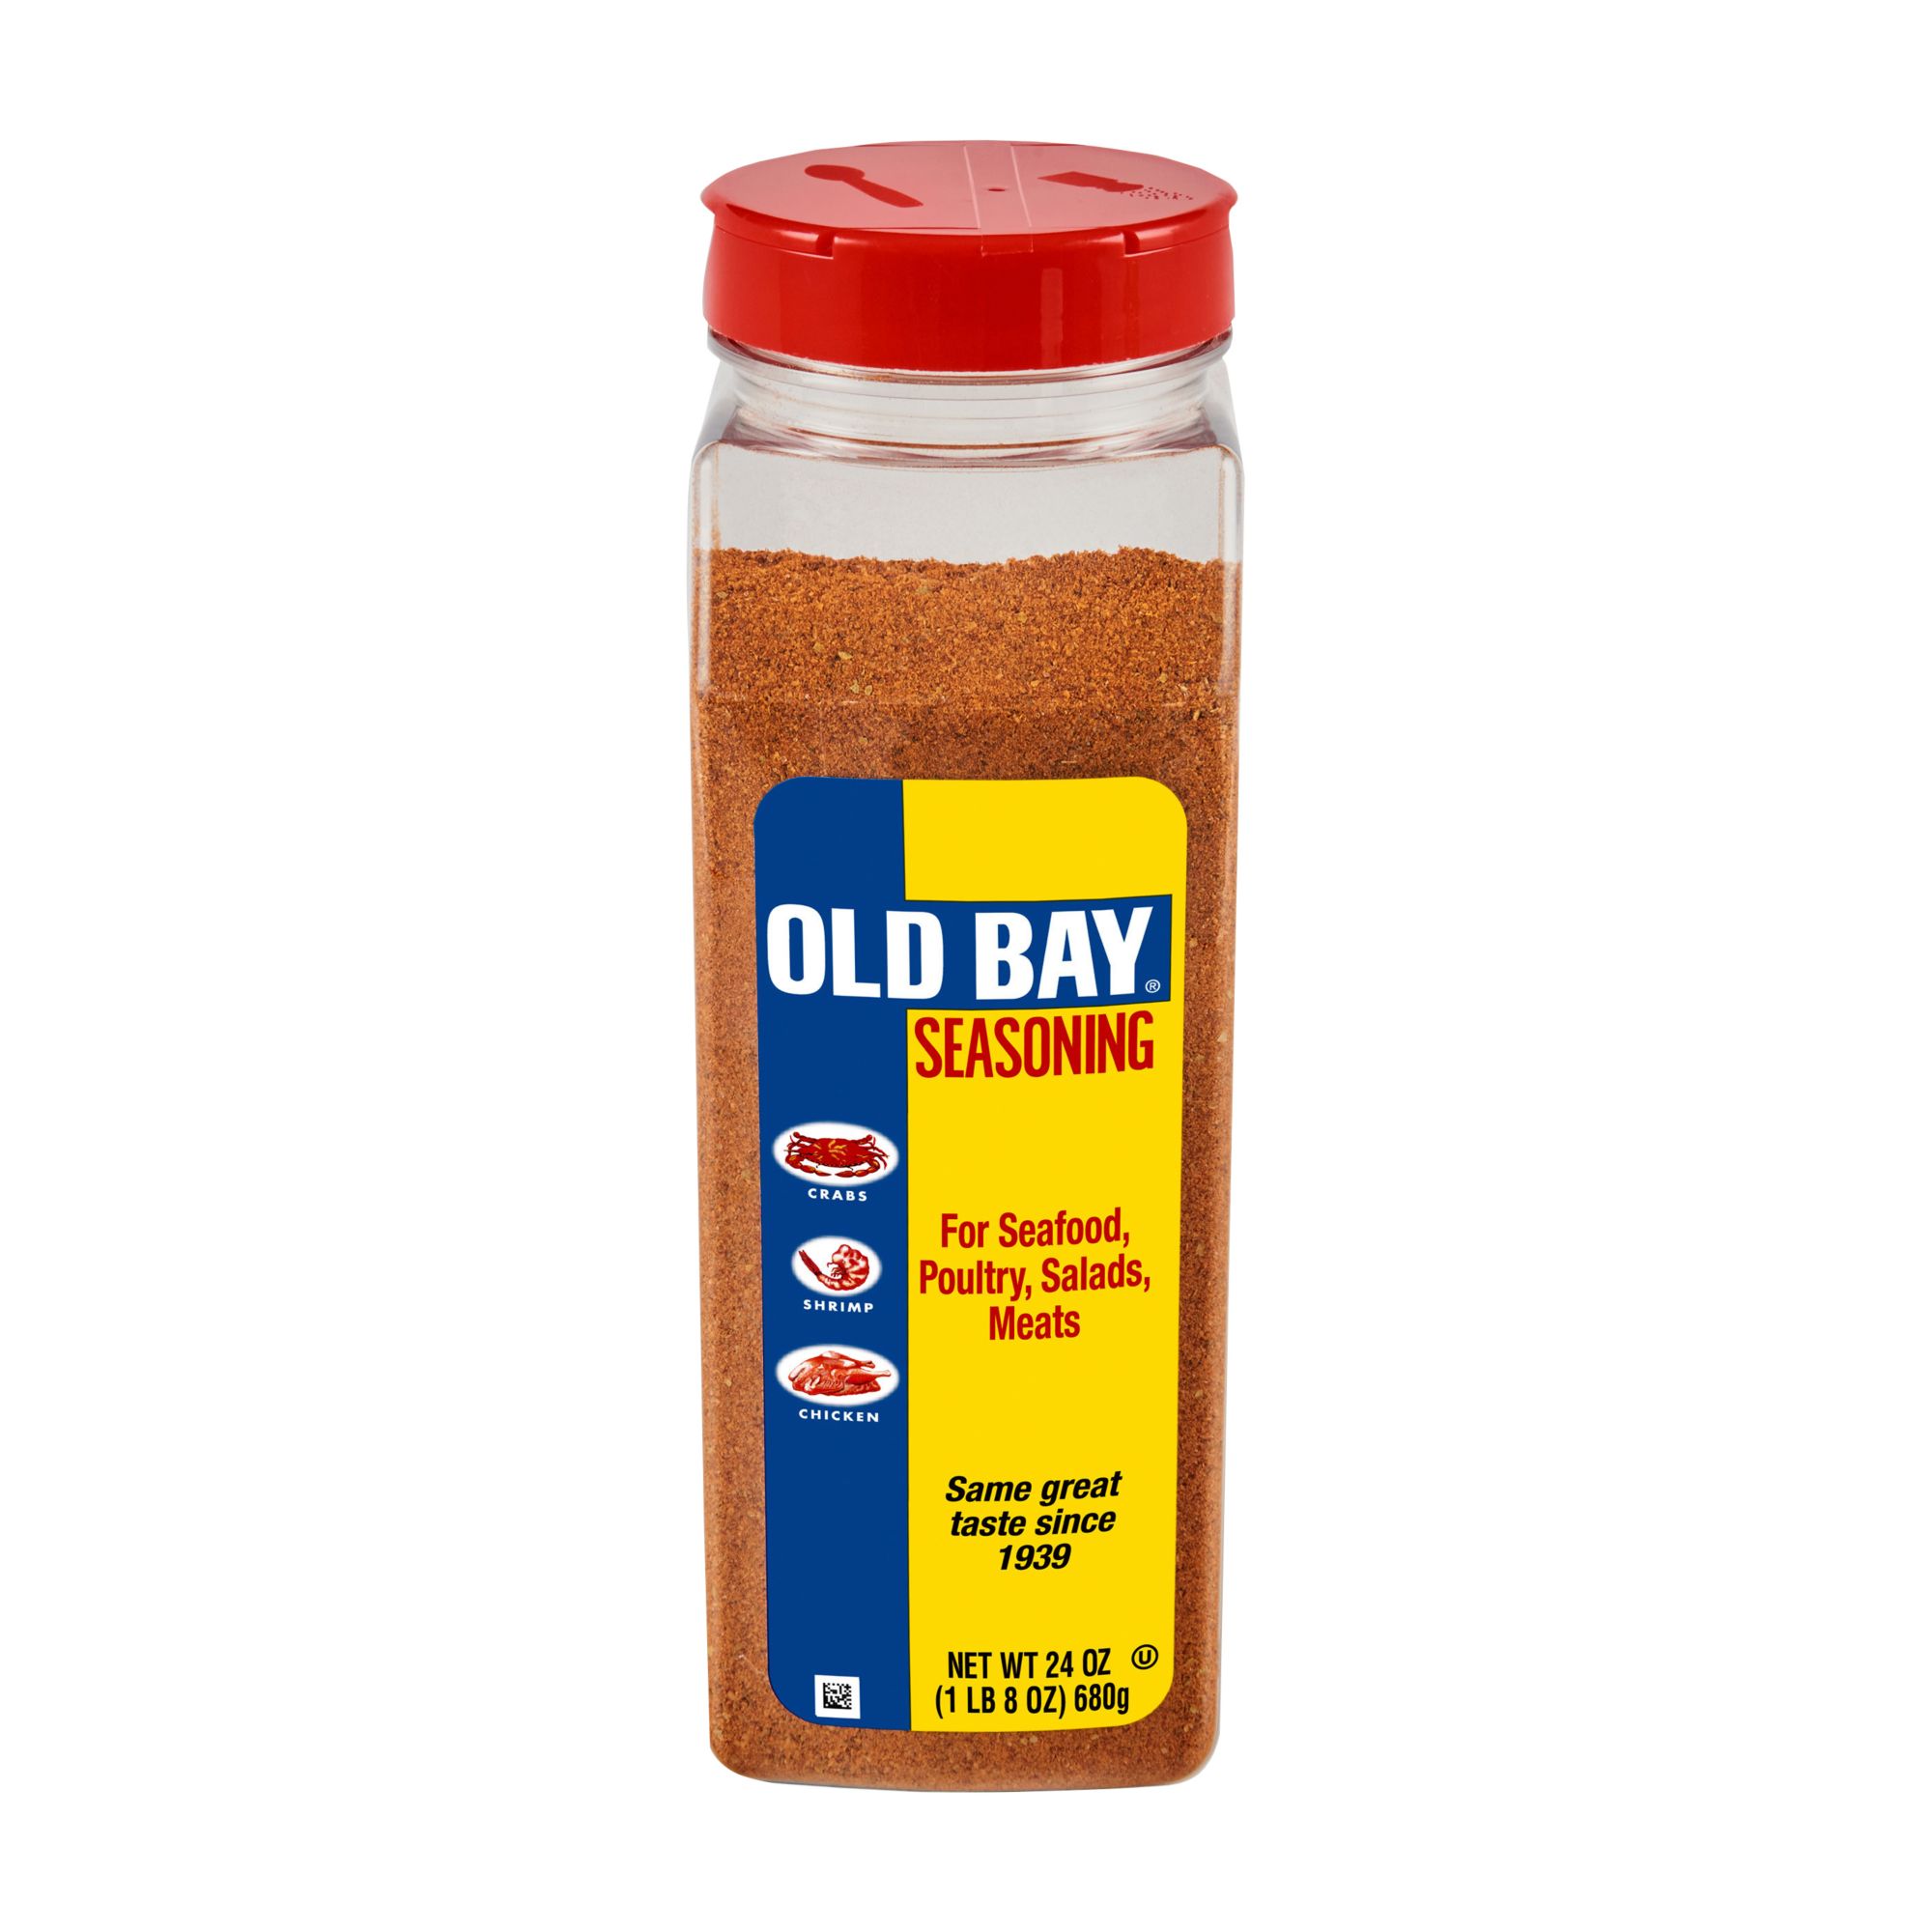 What Is Old Bay Seasoning?